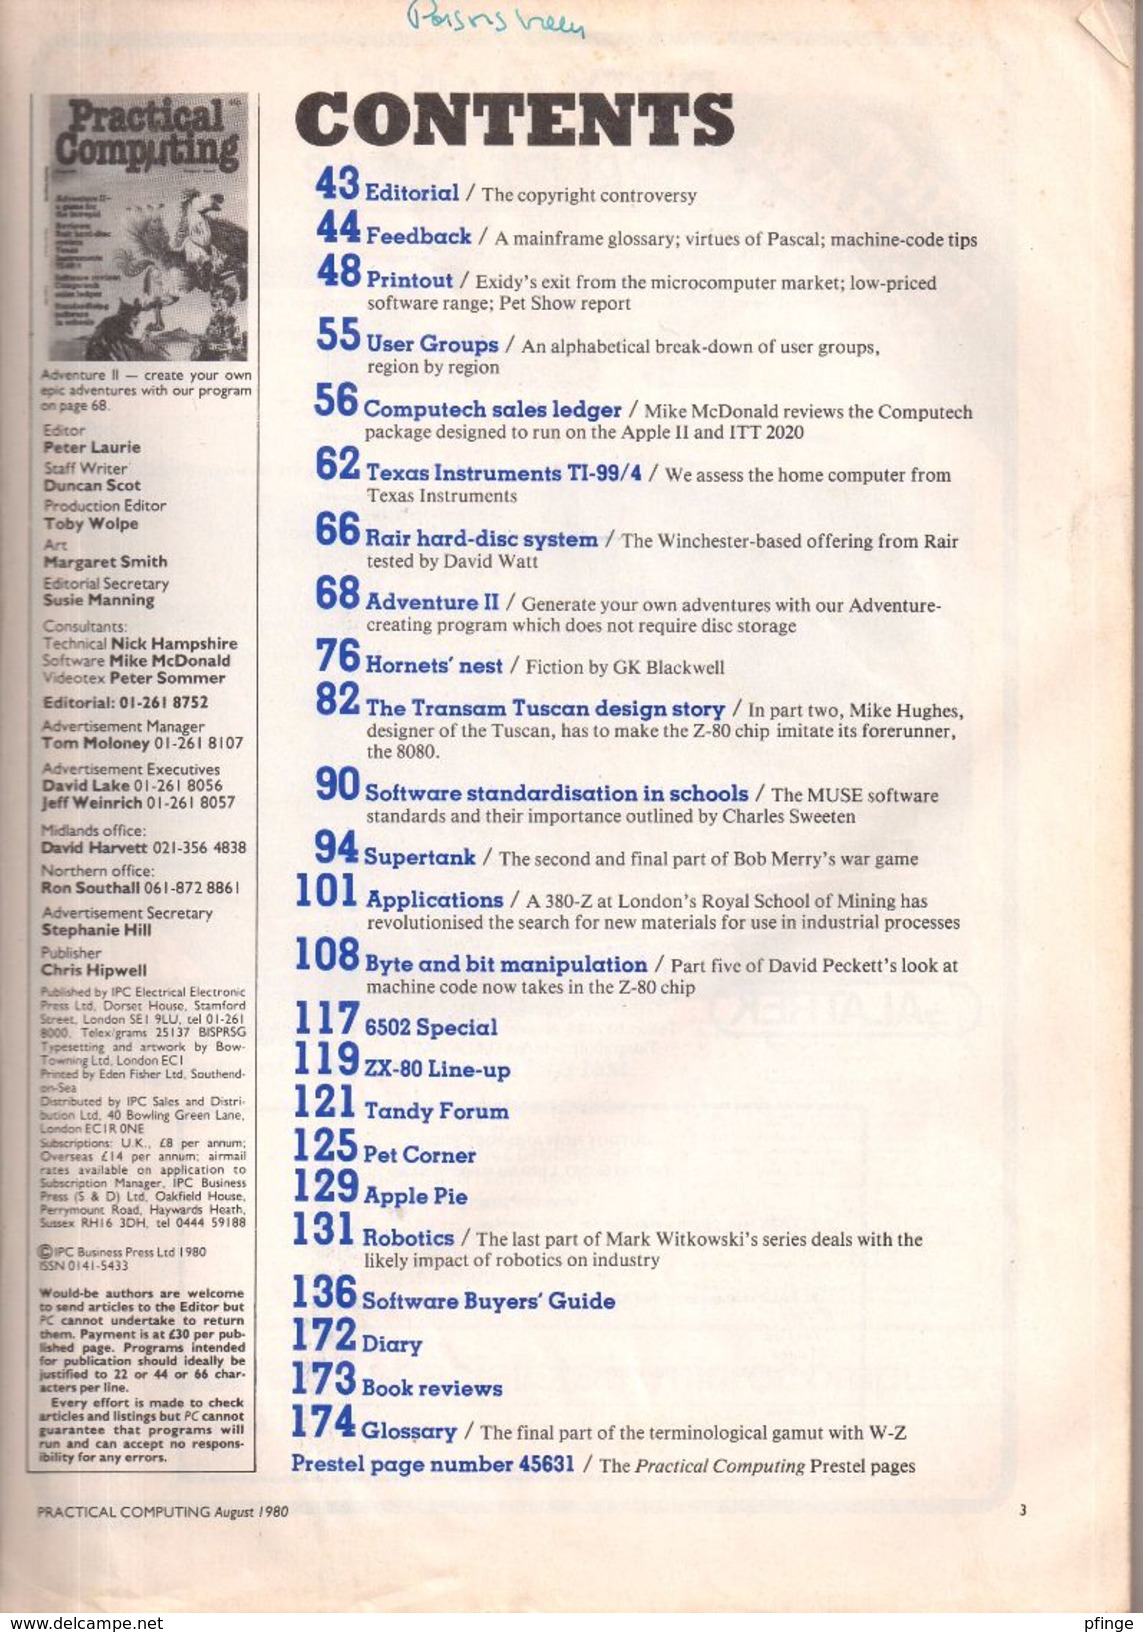 Practical Computing Vol 3 Issue 8, 1980 - Informatique/ IT/ Internet